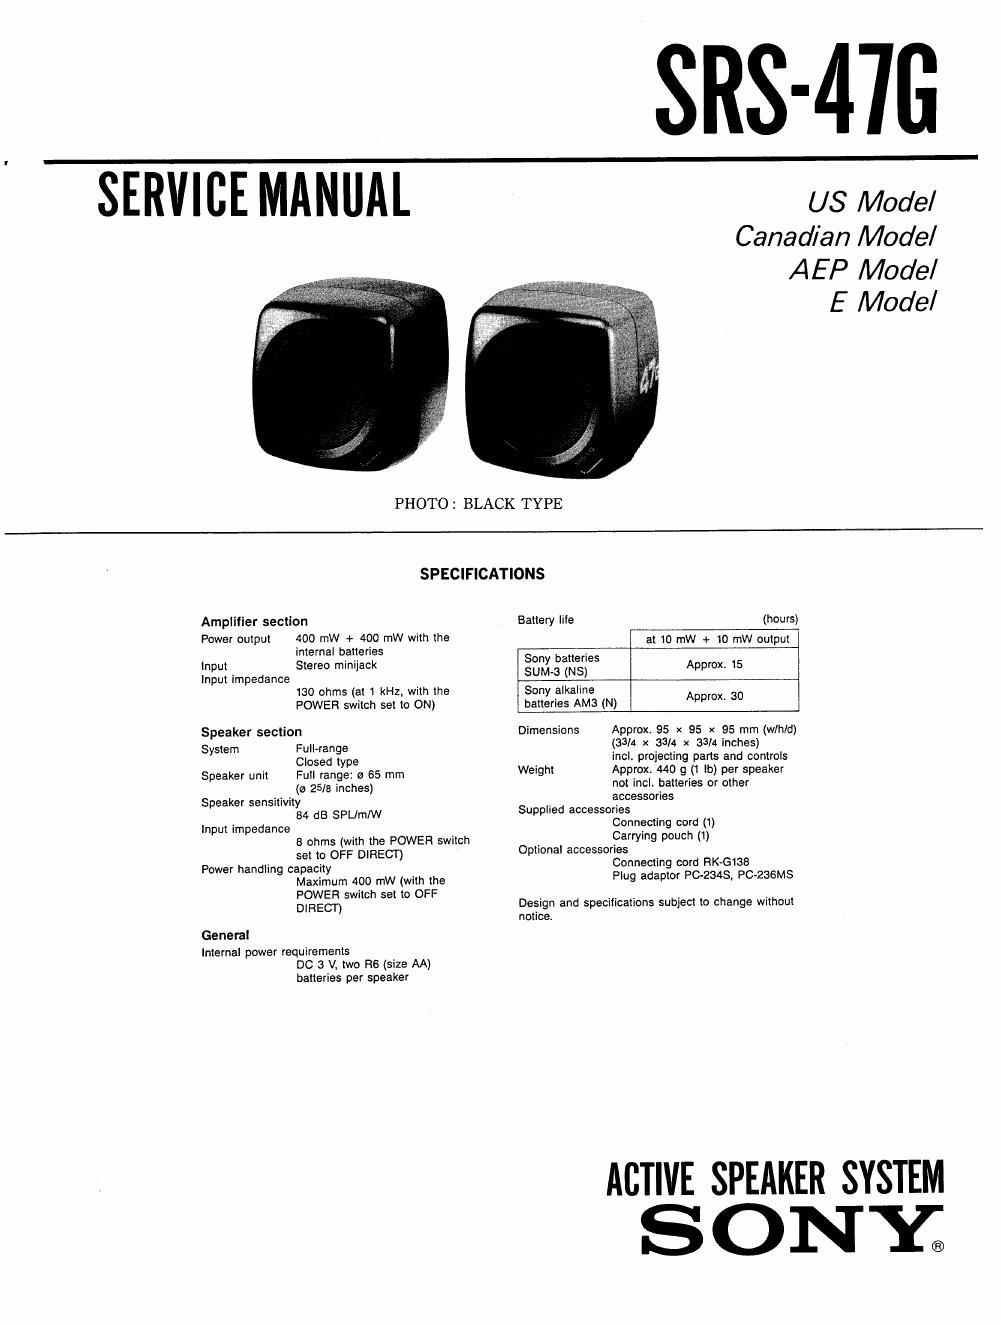 sony srs 47 g service manual